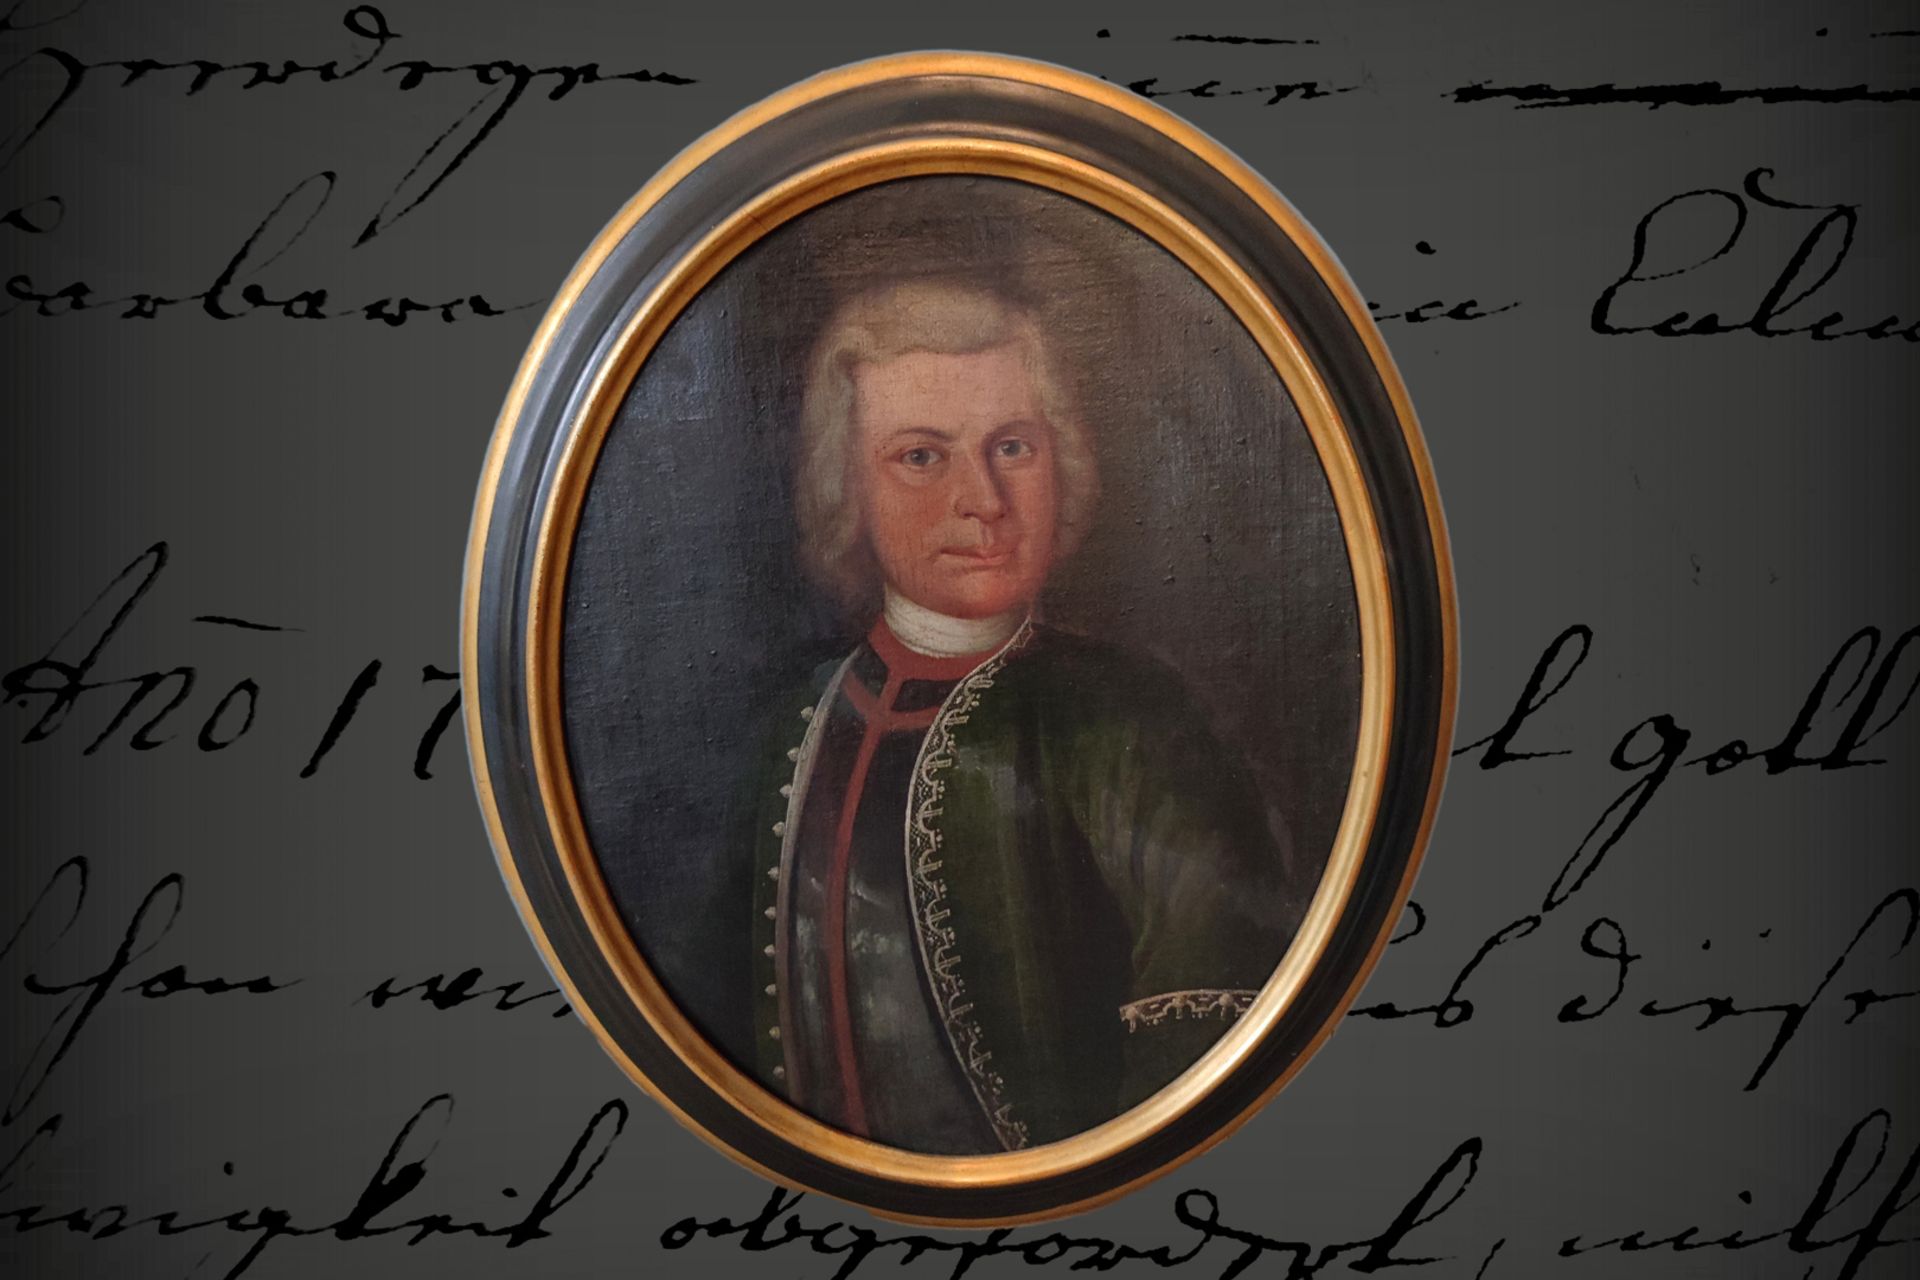 Ahnenportrait, Öl auf Leinwand, 18. Jh., in ovalem Rahmen, H 55 cm